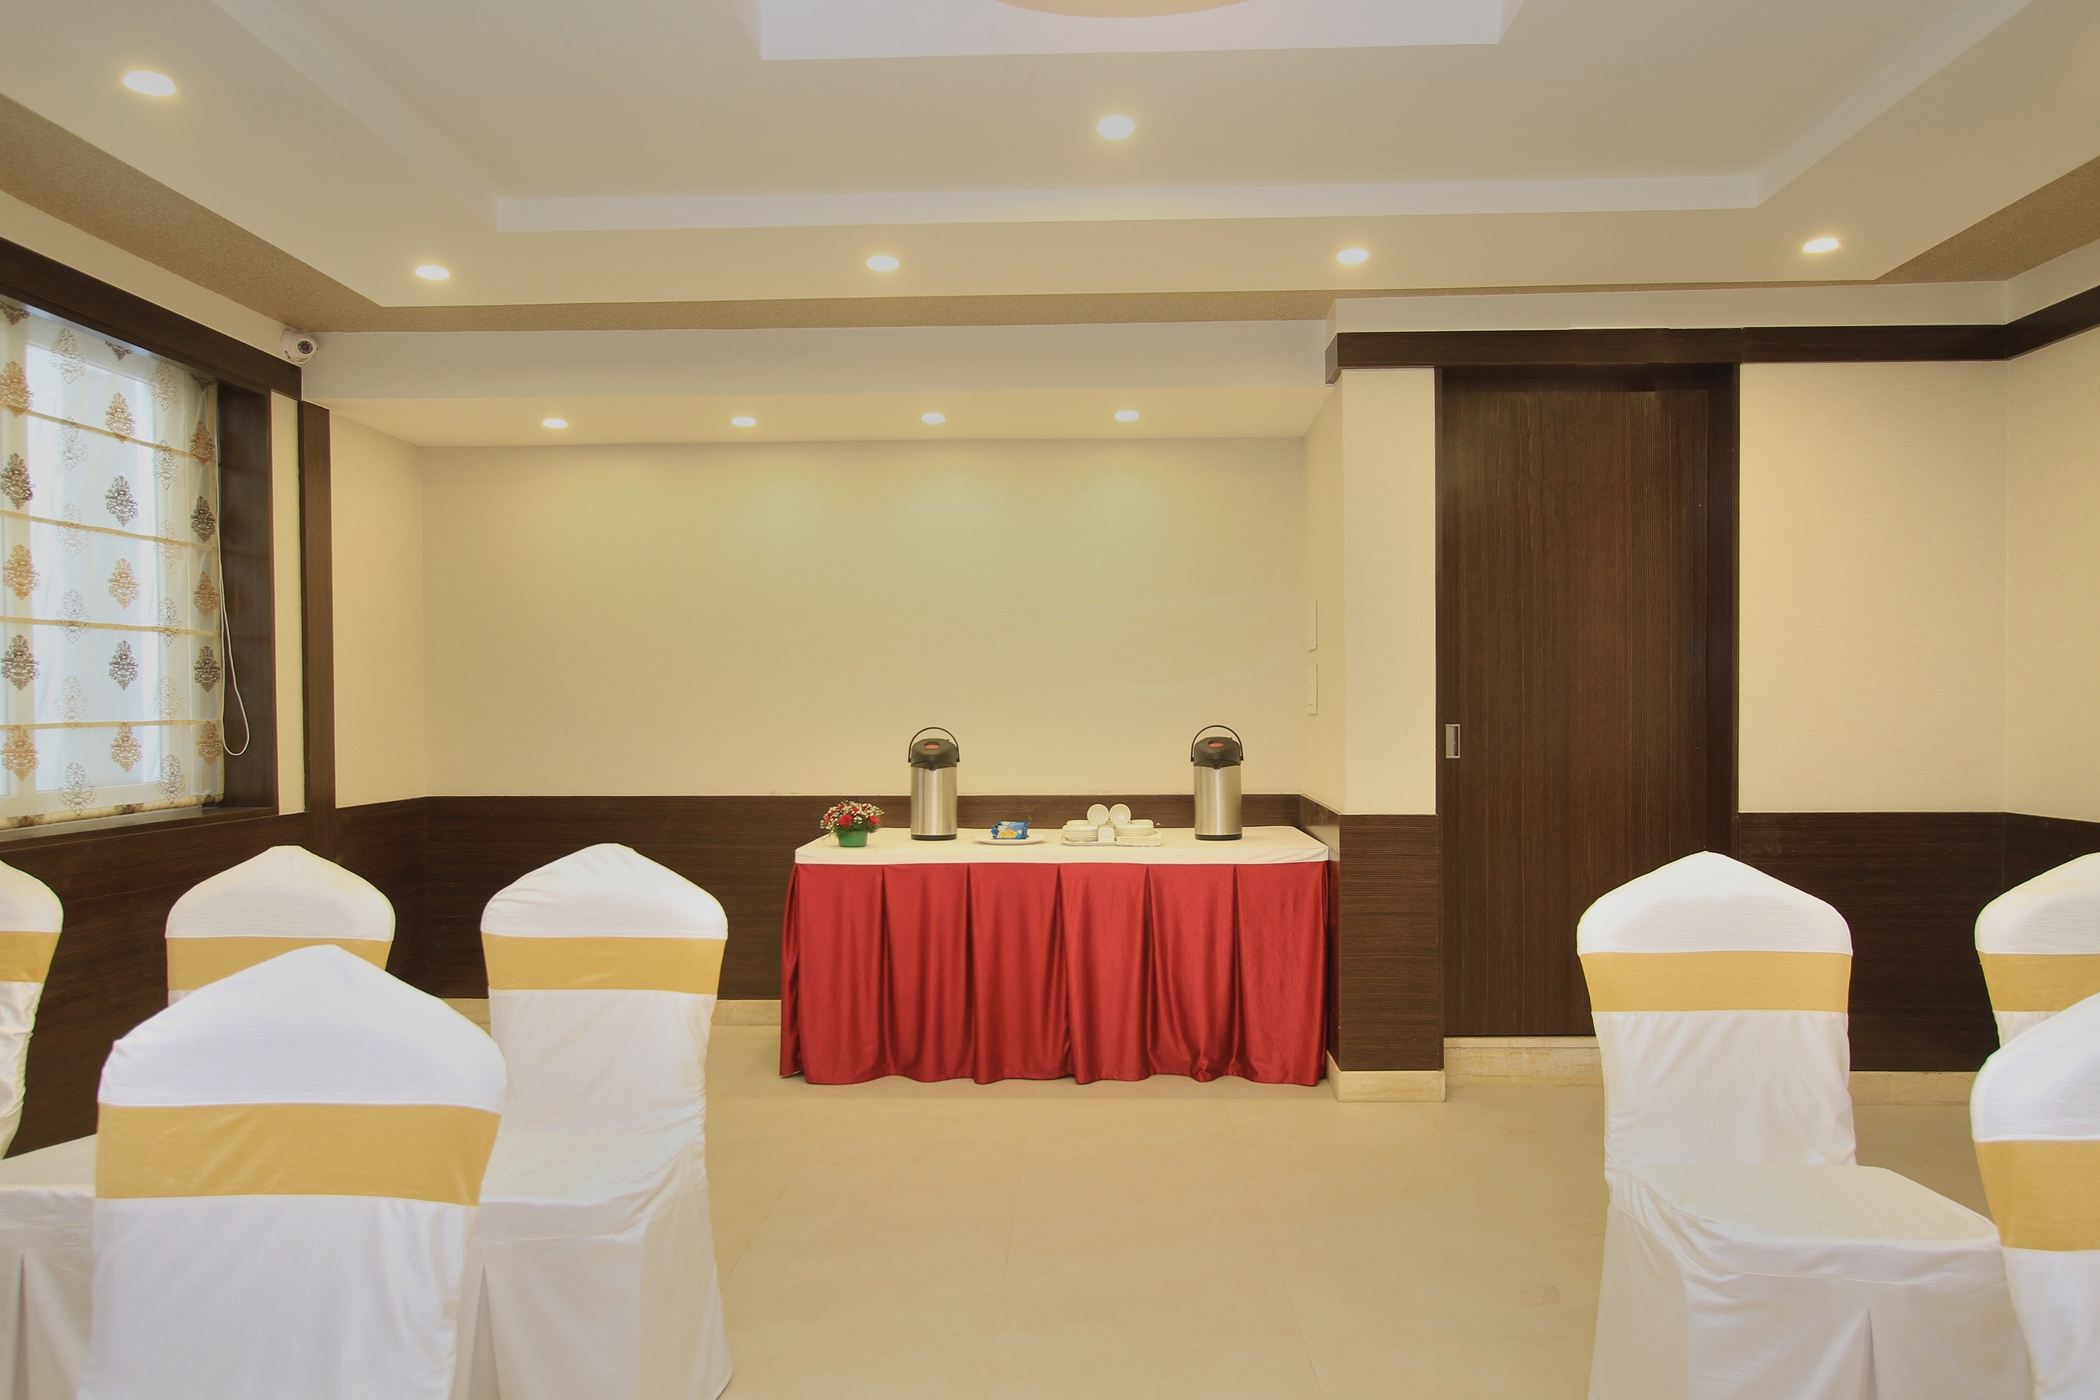 DLX ROOM, rooms in koramangala, La Sara Regent Hotel, Koramangala,  2  3 1